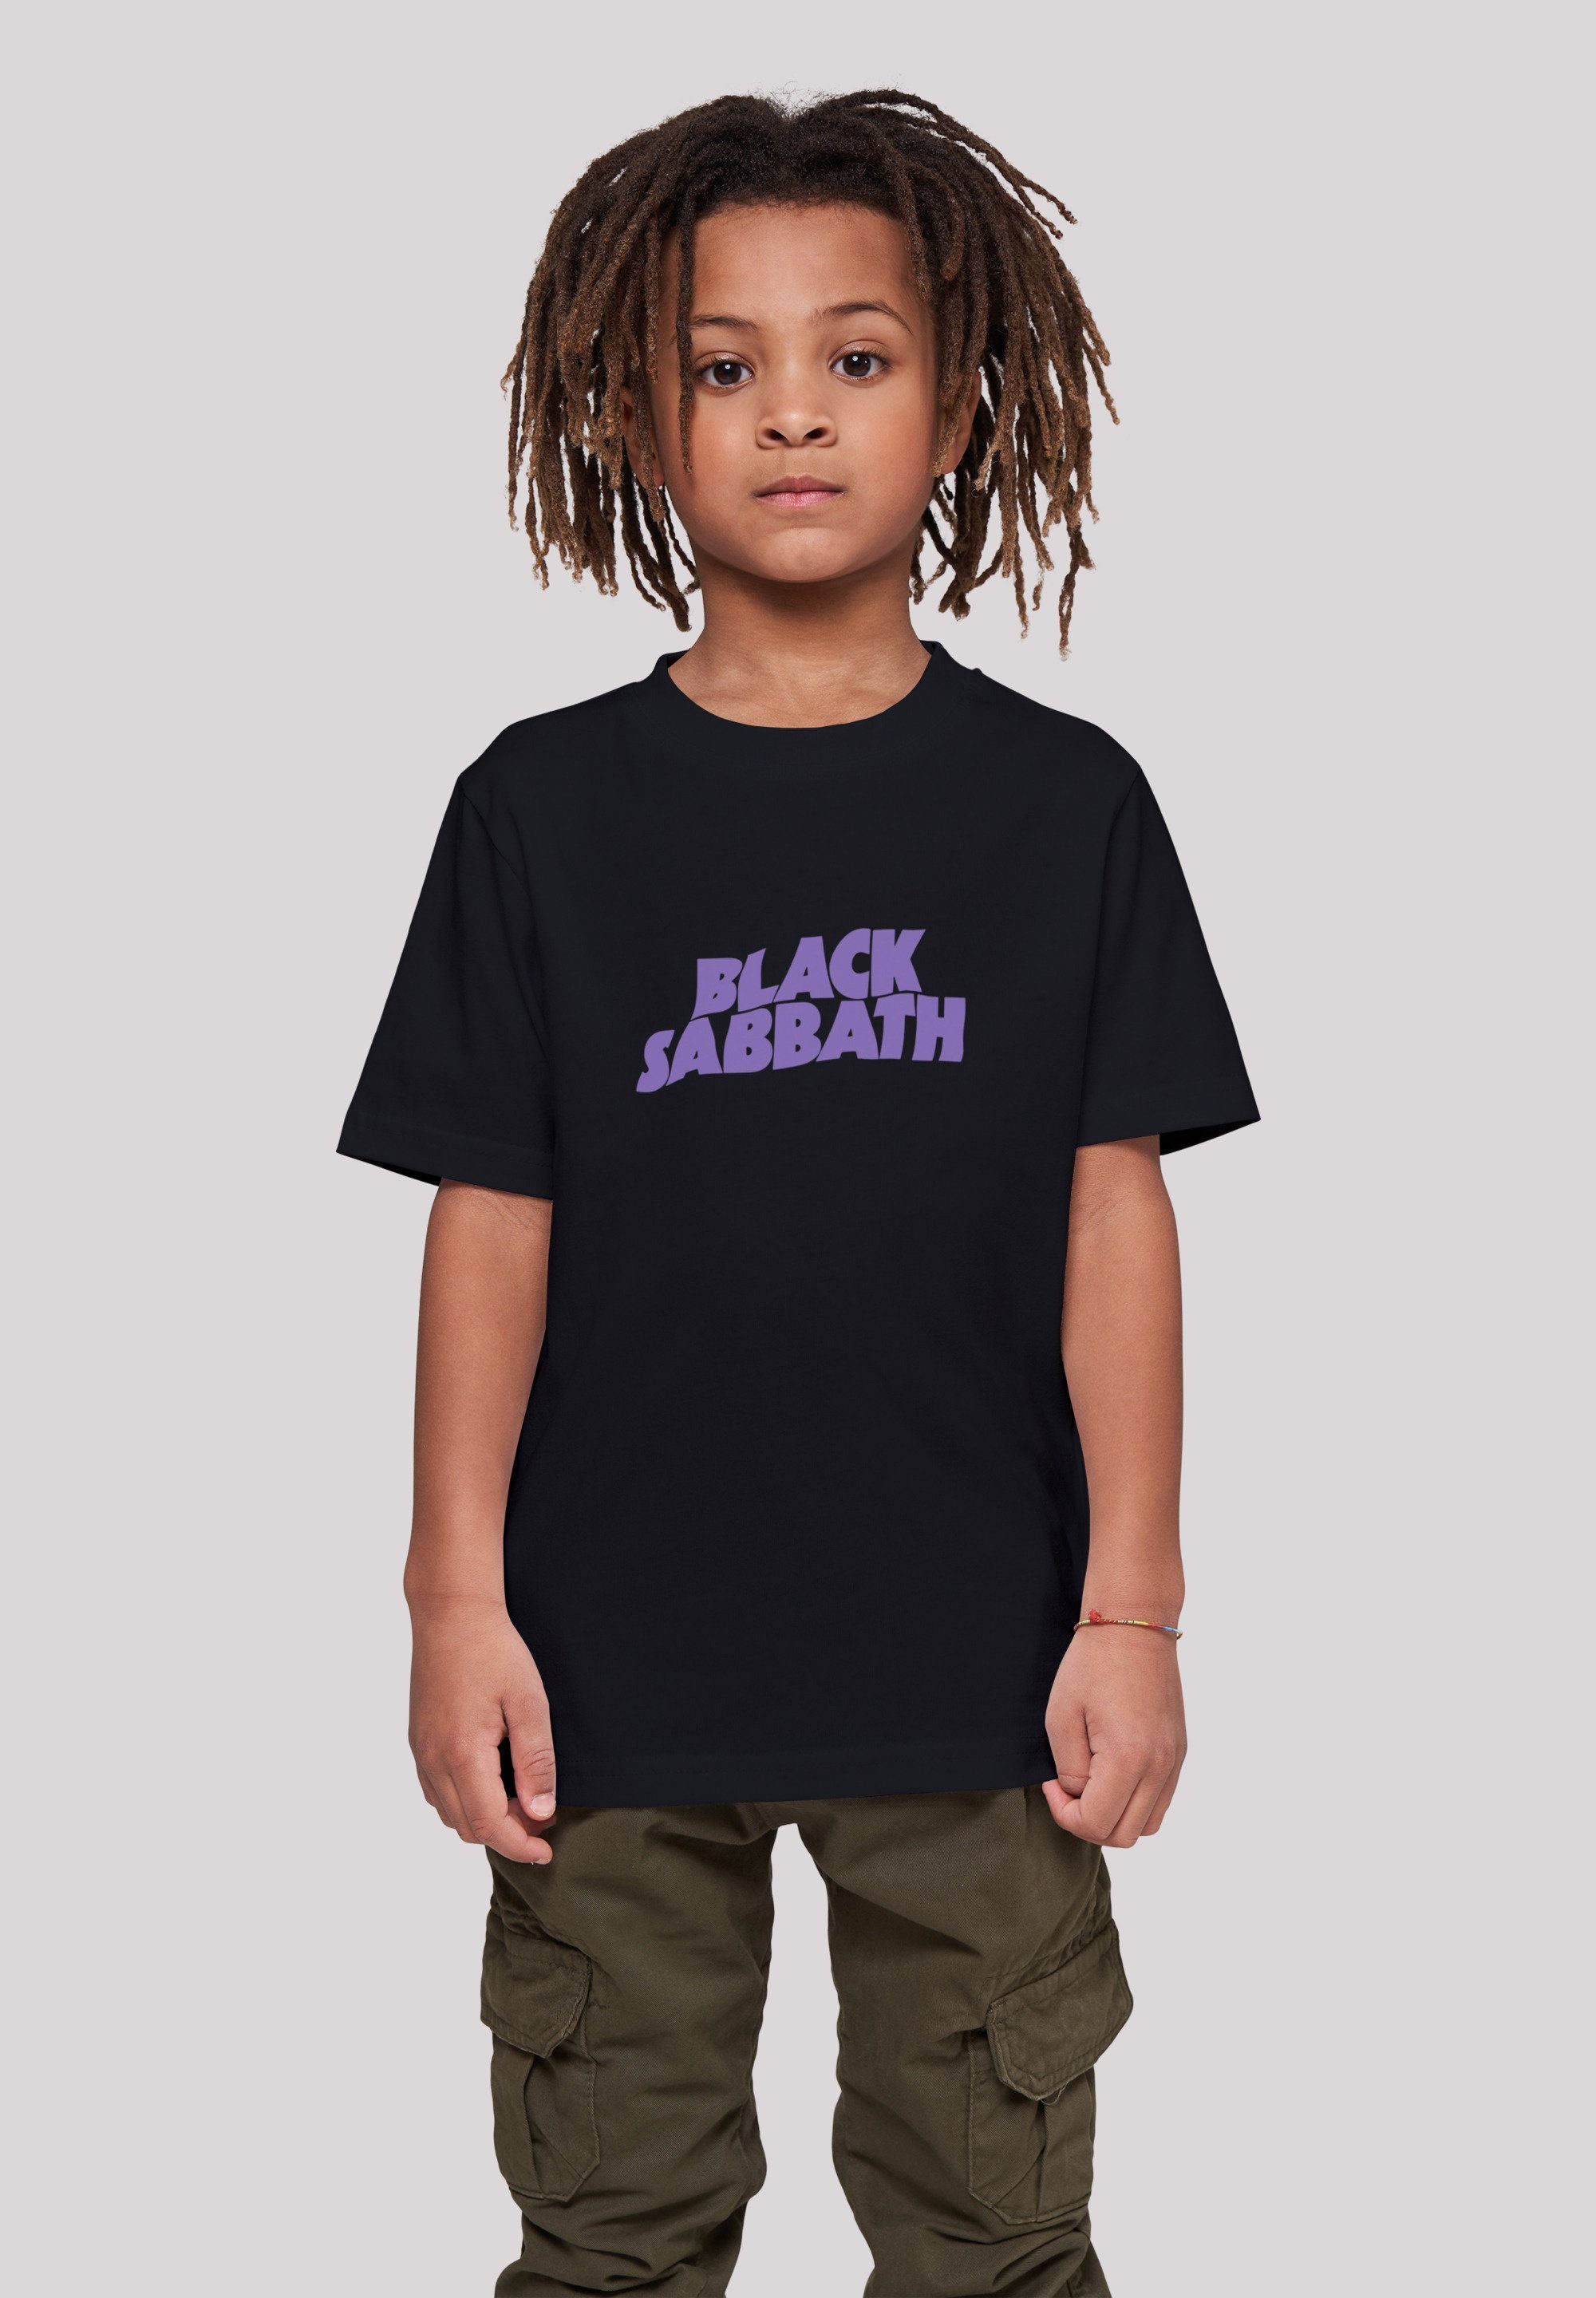 Metal Logo F4NT4STIC T-Shirt Print Black Black Heavy Wavy Band schwarz Sabbath